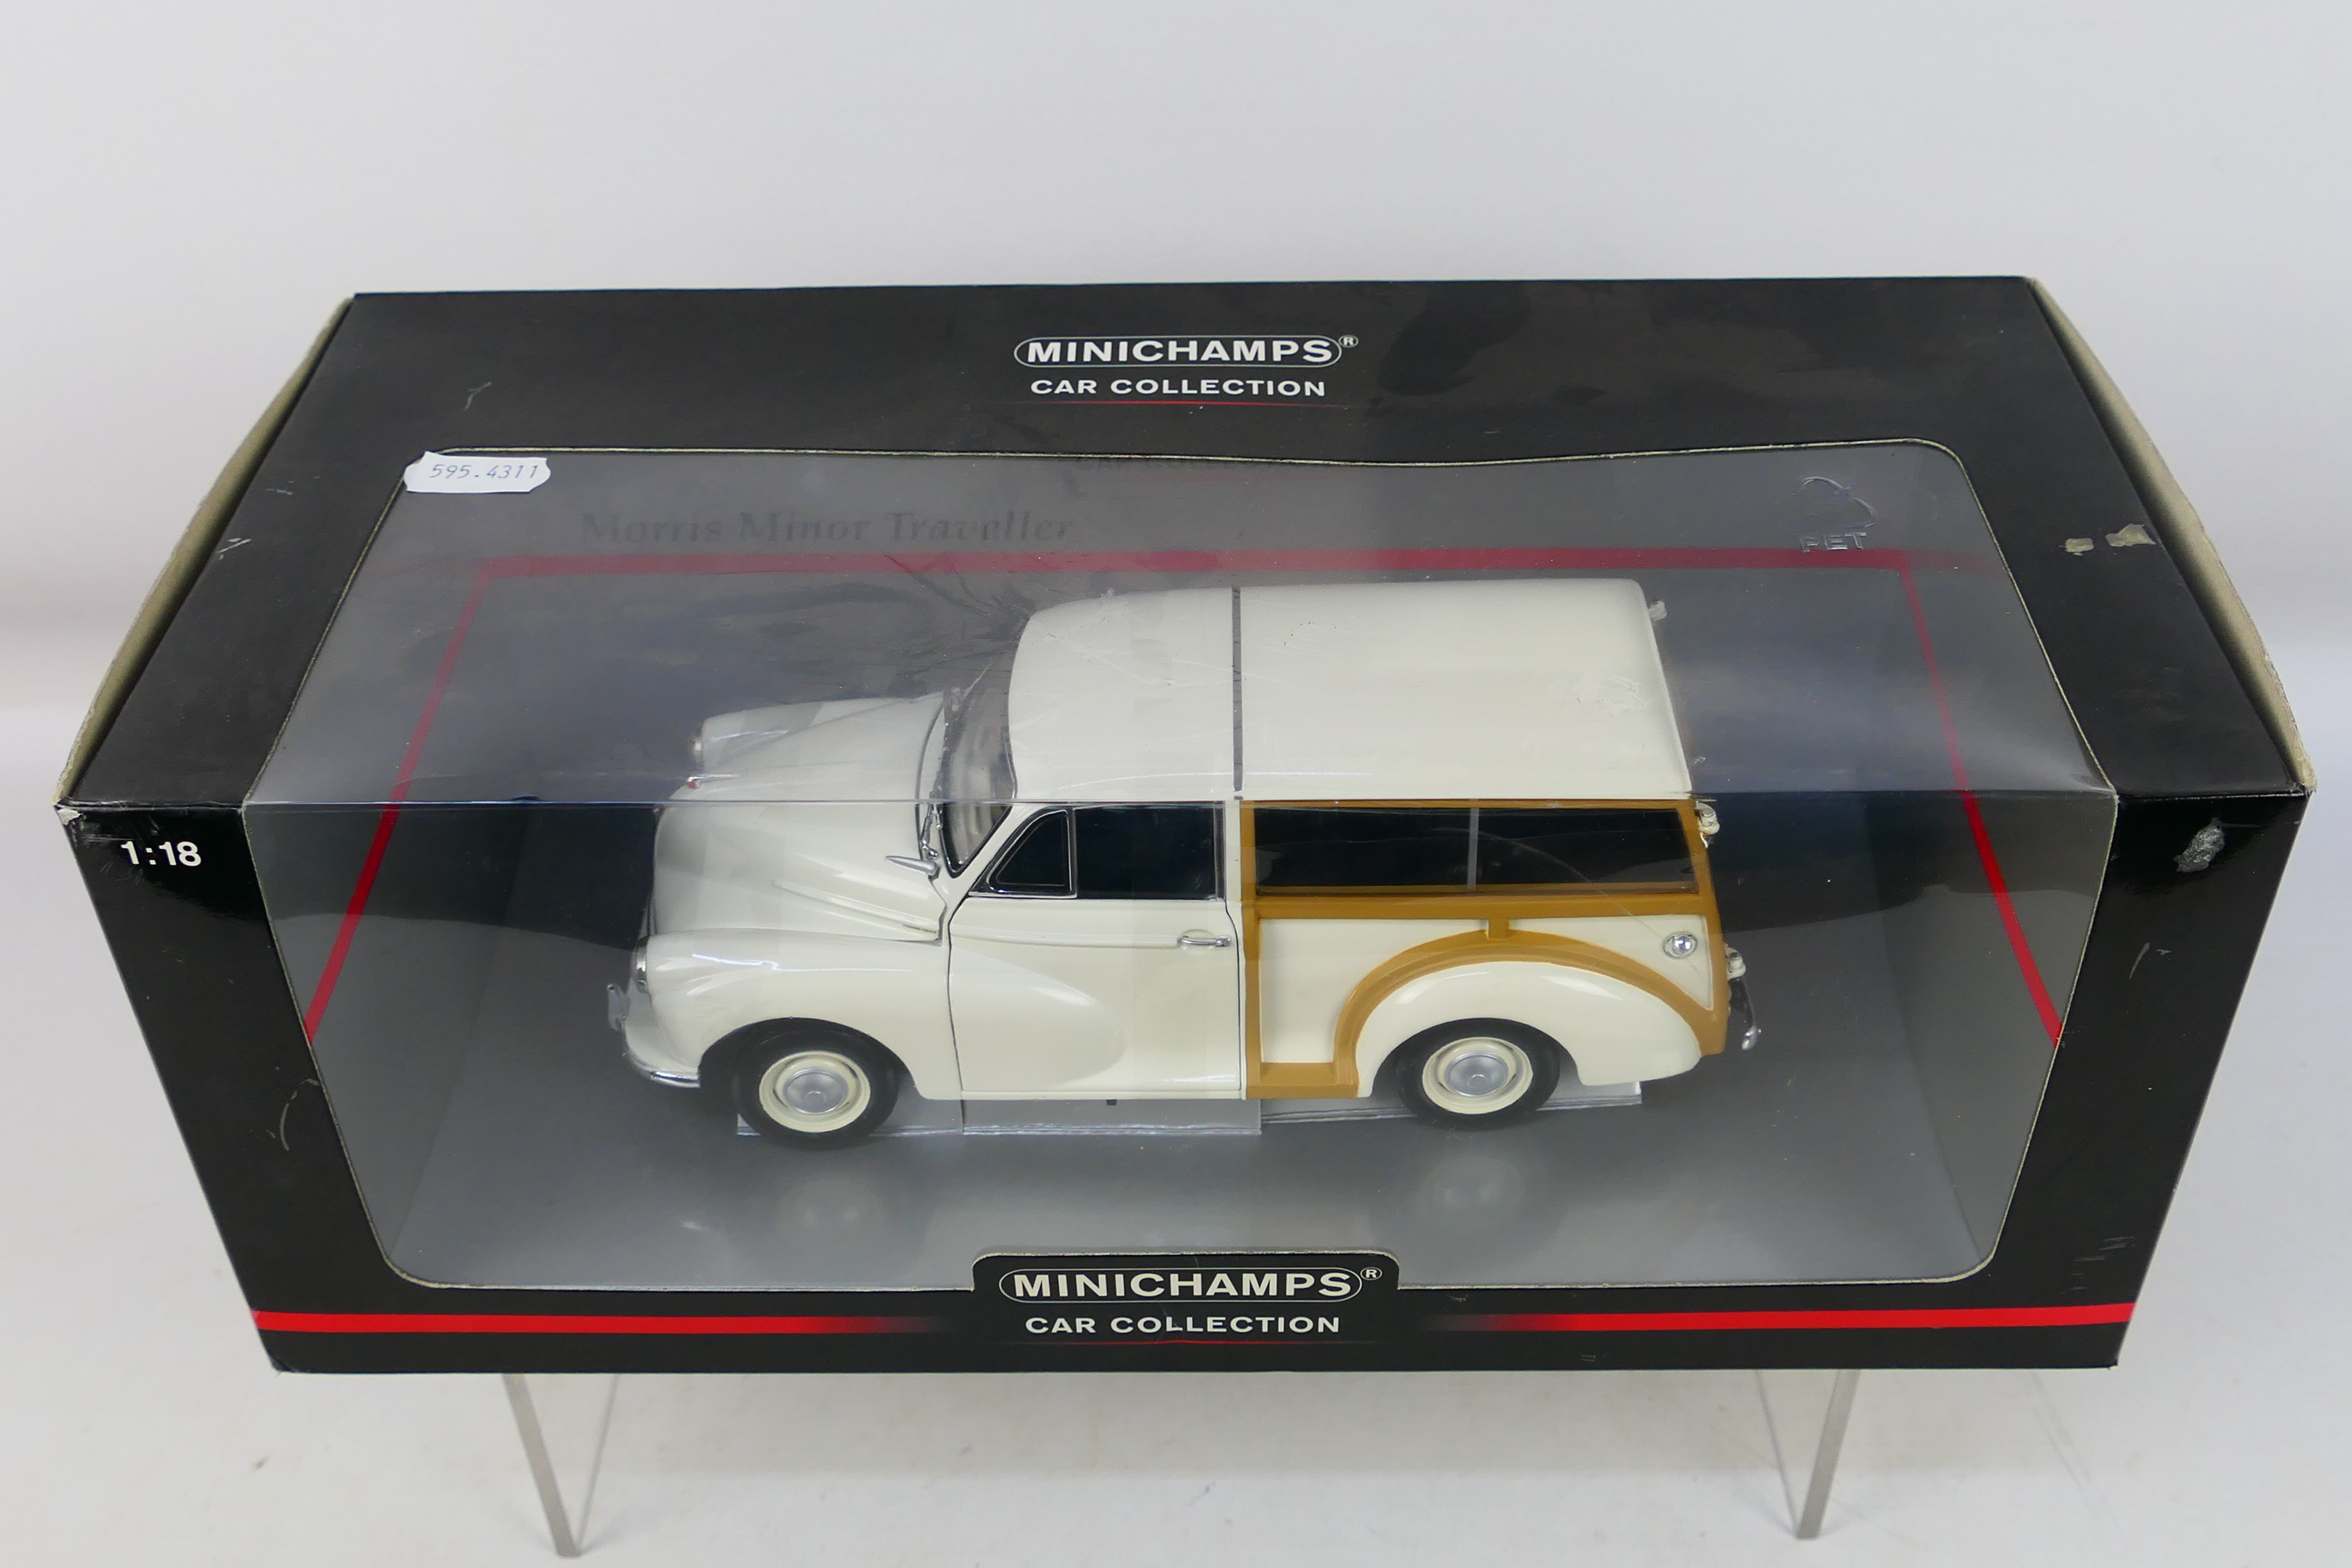 Minichamps - A boxed Minichamps 'Car Collection' #150137010 1:18 scale Morris Minor Traveller. - Image 3 of 3